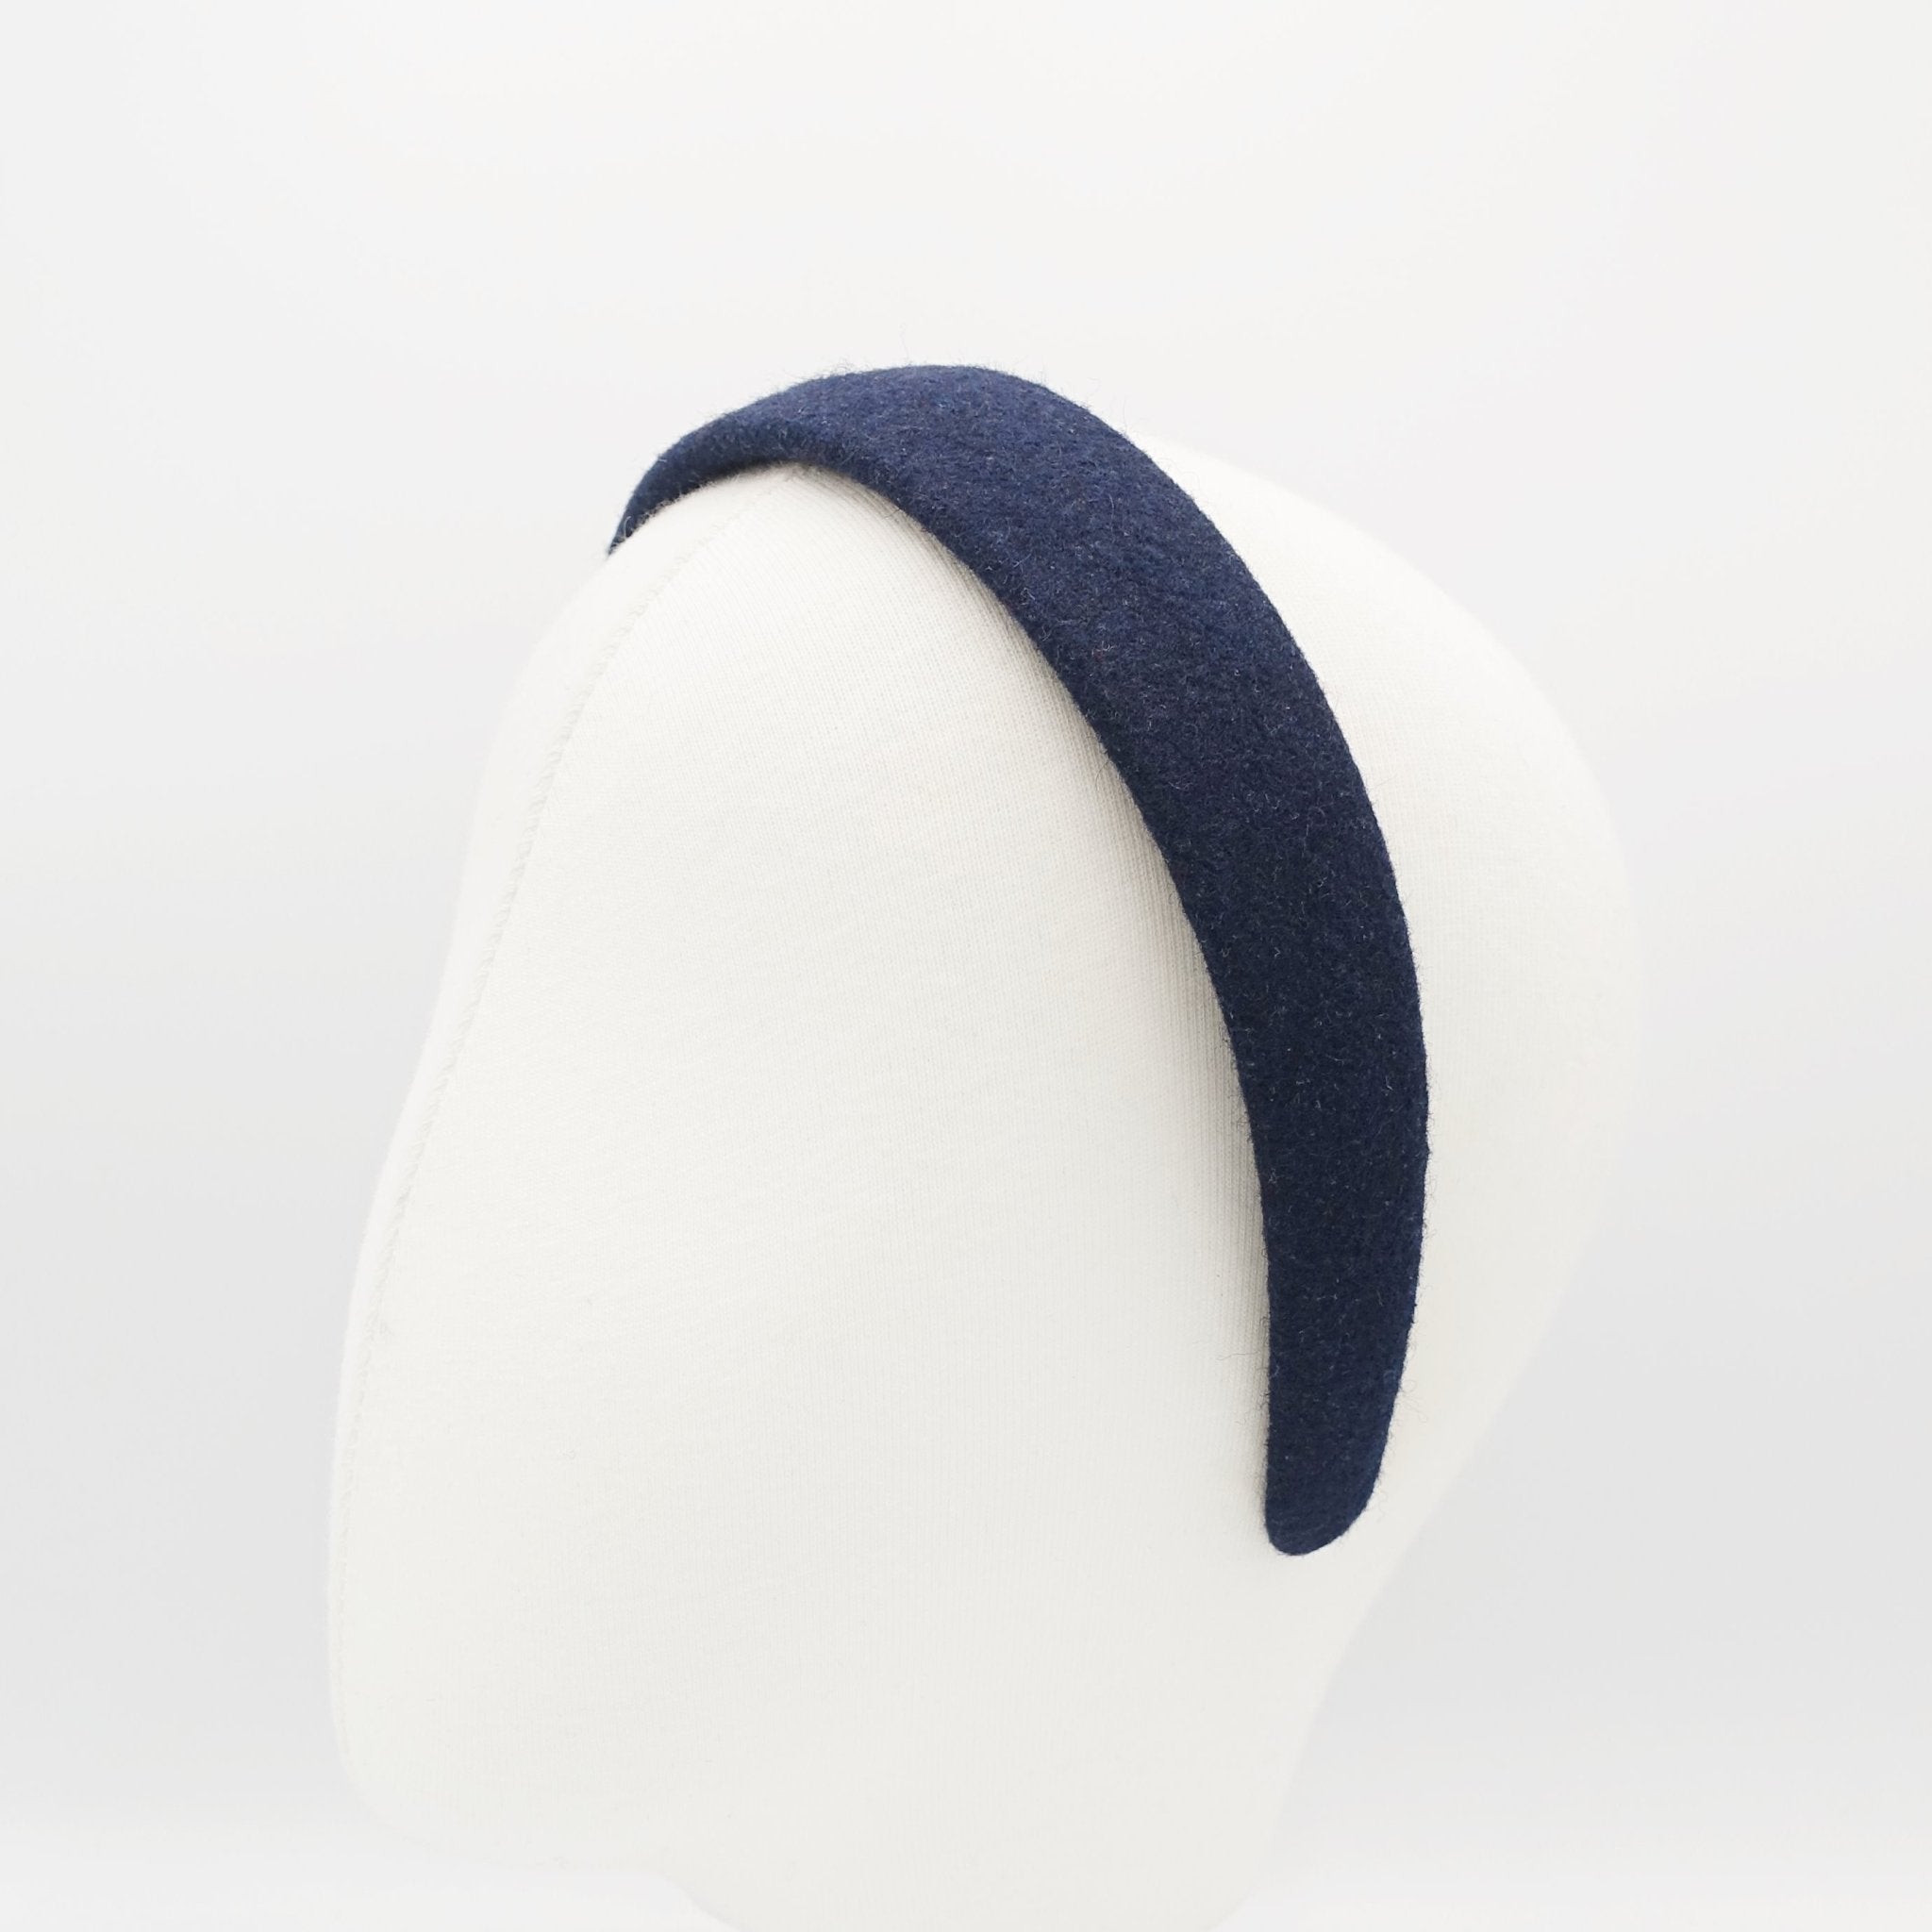 veryshine.com hairband/headband Navy woolen fabric headband solid color hairband women hair accessory